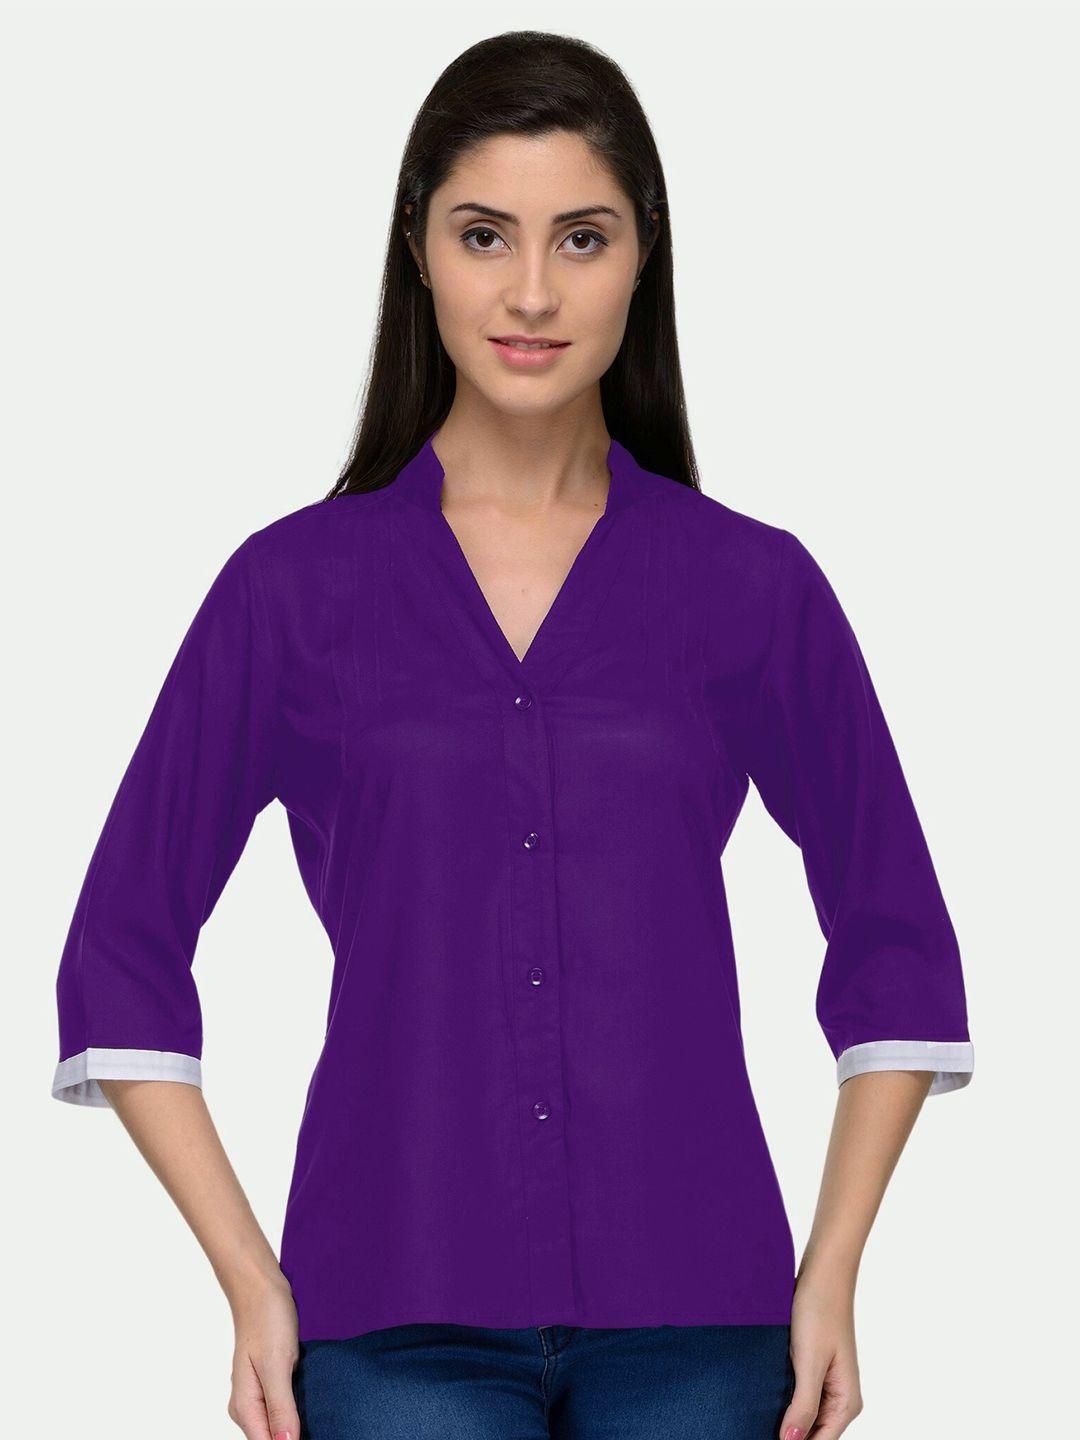 patrorna plus size women purple comfort casual shirt